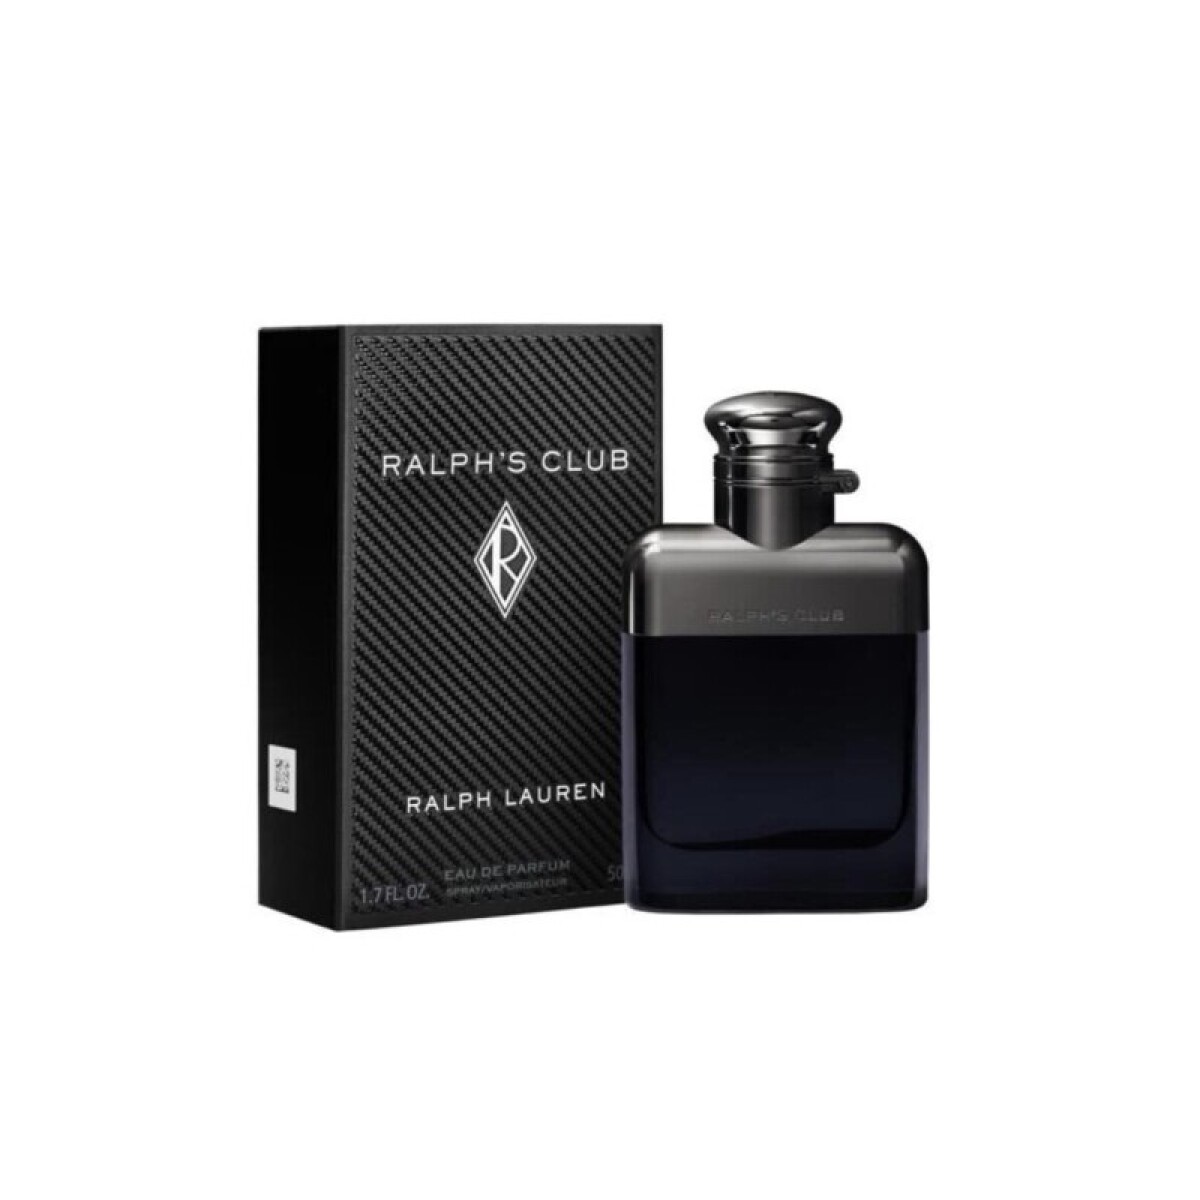 Perfume Ralph's Club Ed. Limitada Edp 50 Ml. 